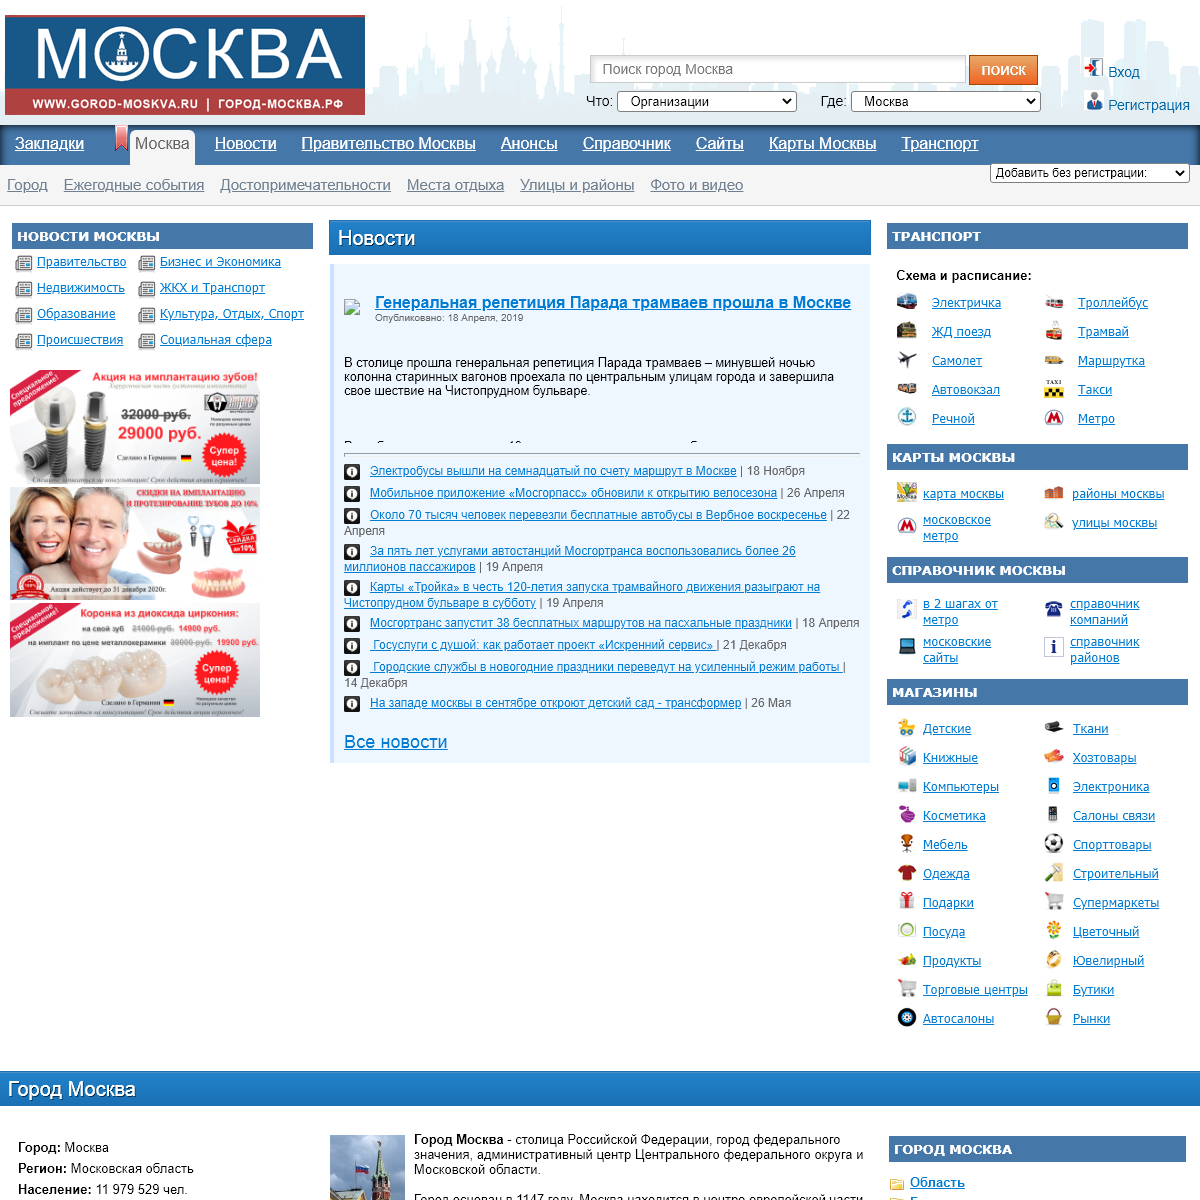 A complete backup of gorod-moskva.ru